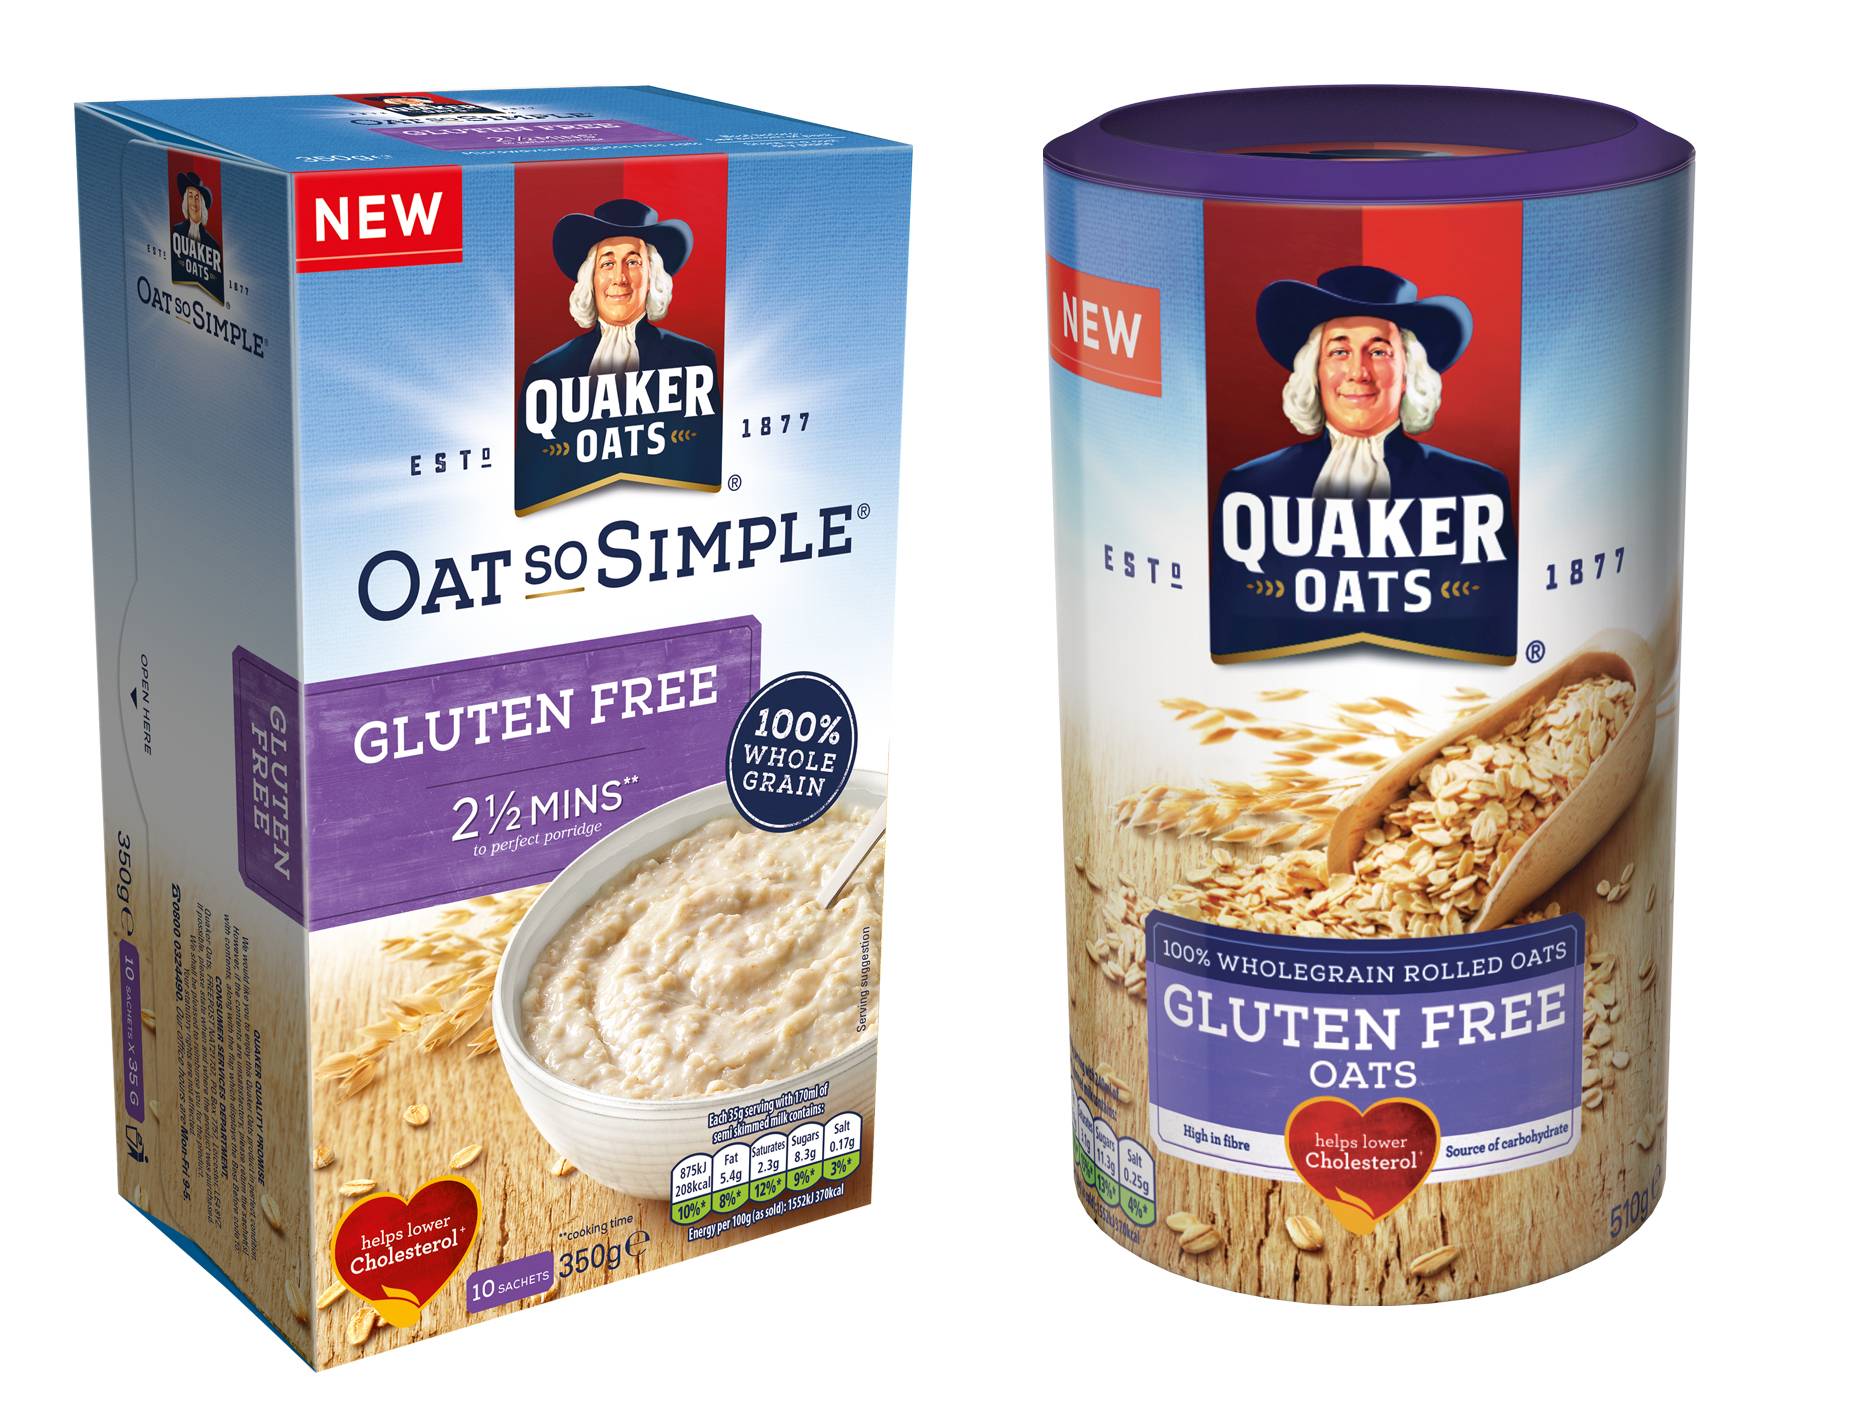 Quaker Oats launches gluten free variants